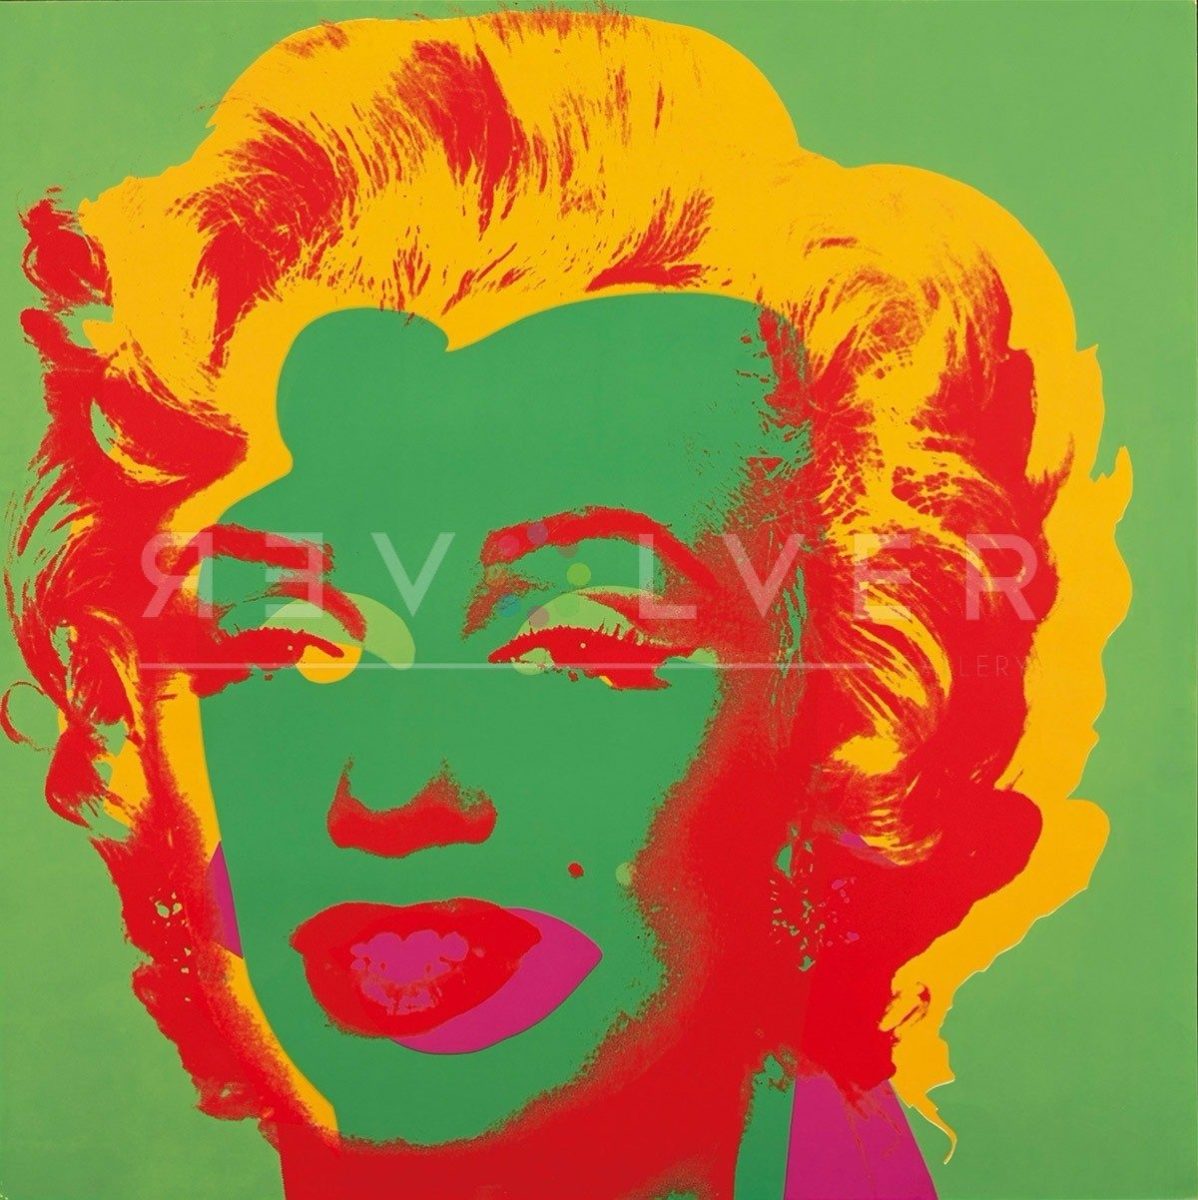 Andy Warhol Marilyn Monroe Pop Art